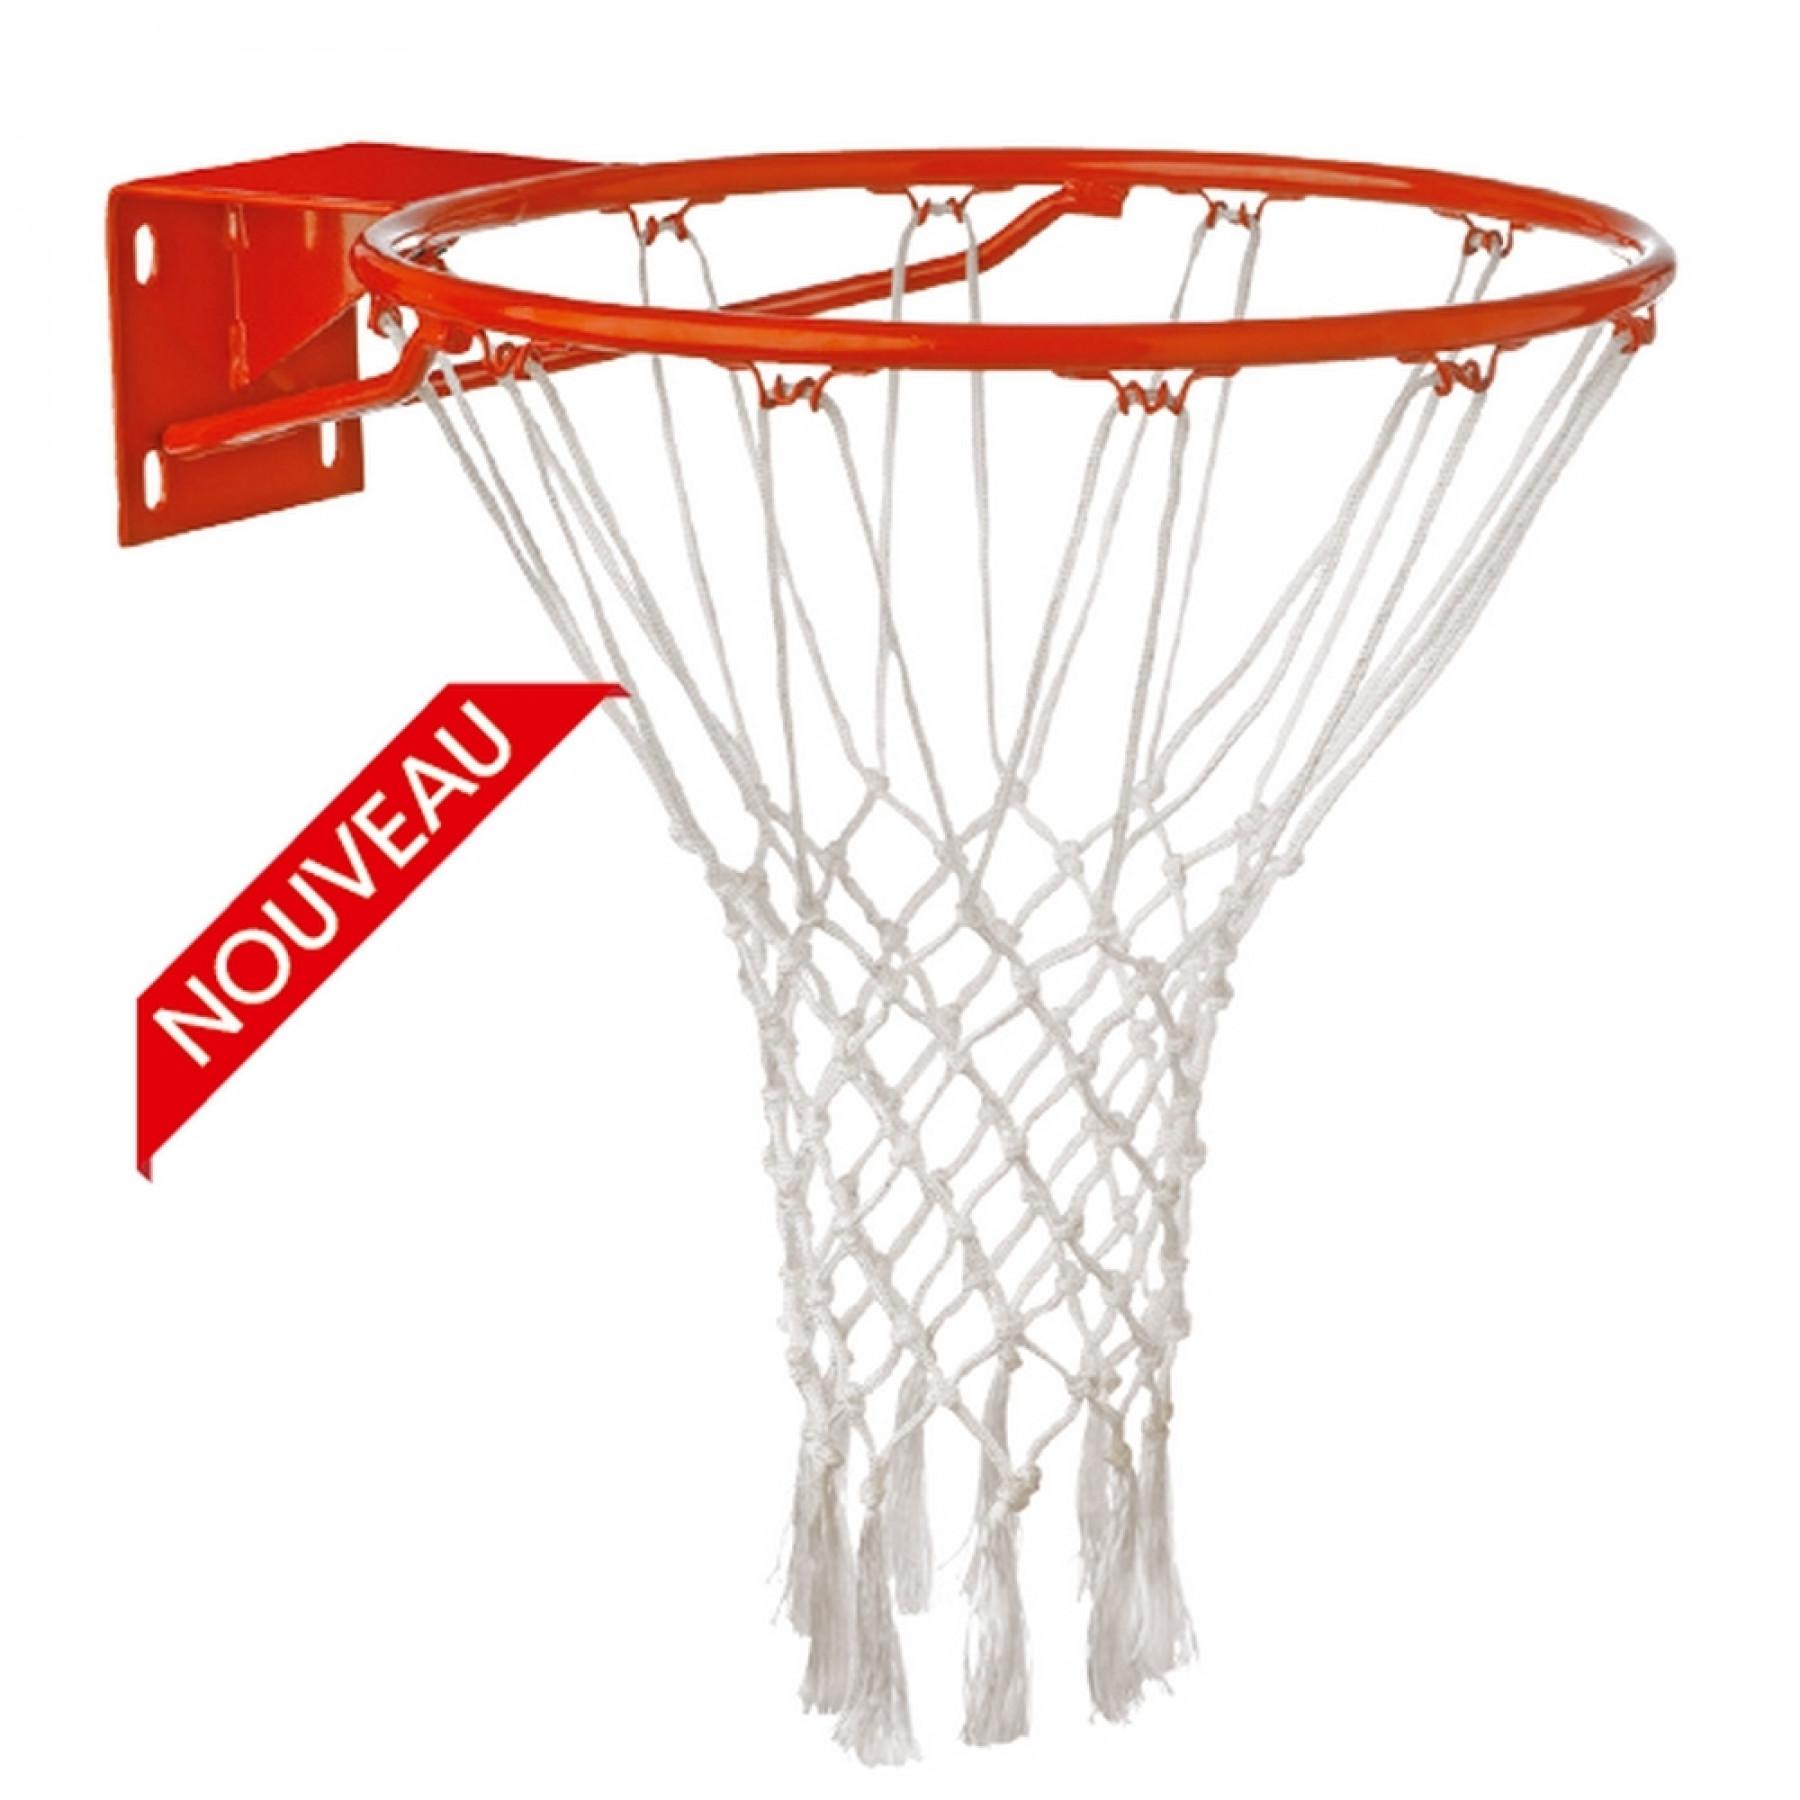 Rede de franjas de basquetebol 6 mm tremblay (x2)